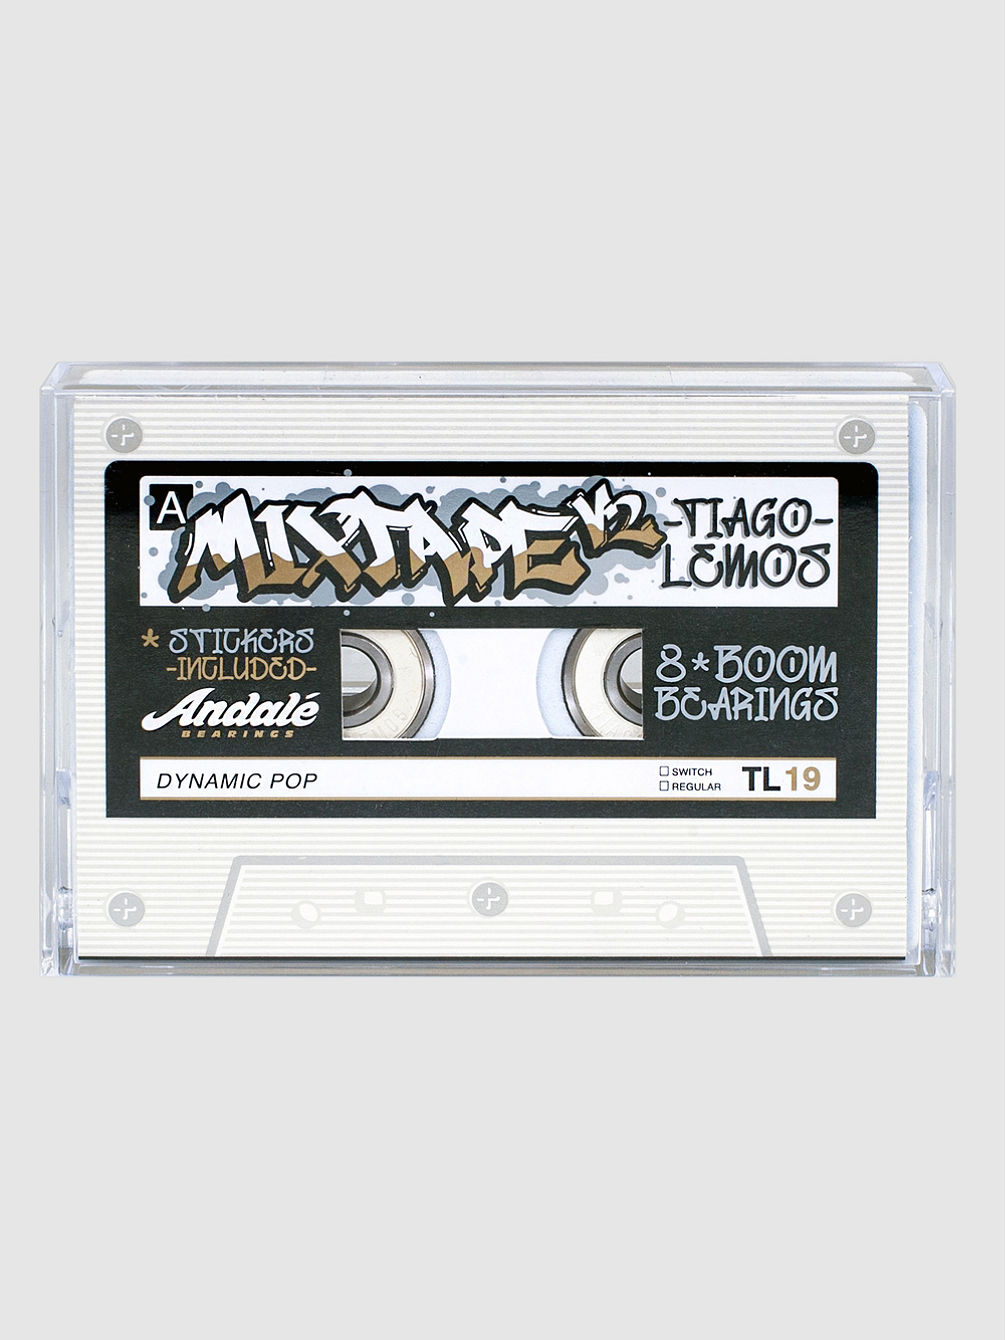 Tiago Mixtape Volume 2 Rodamientos